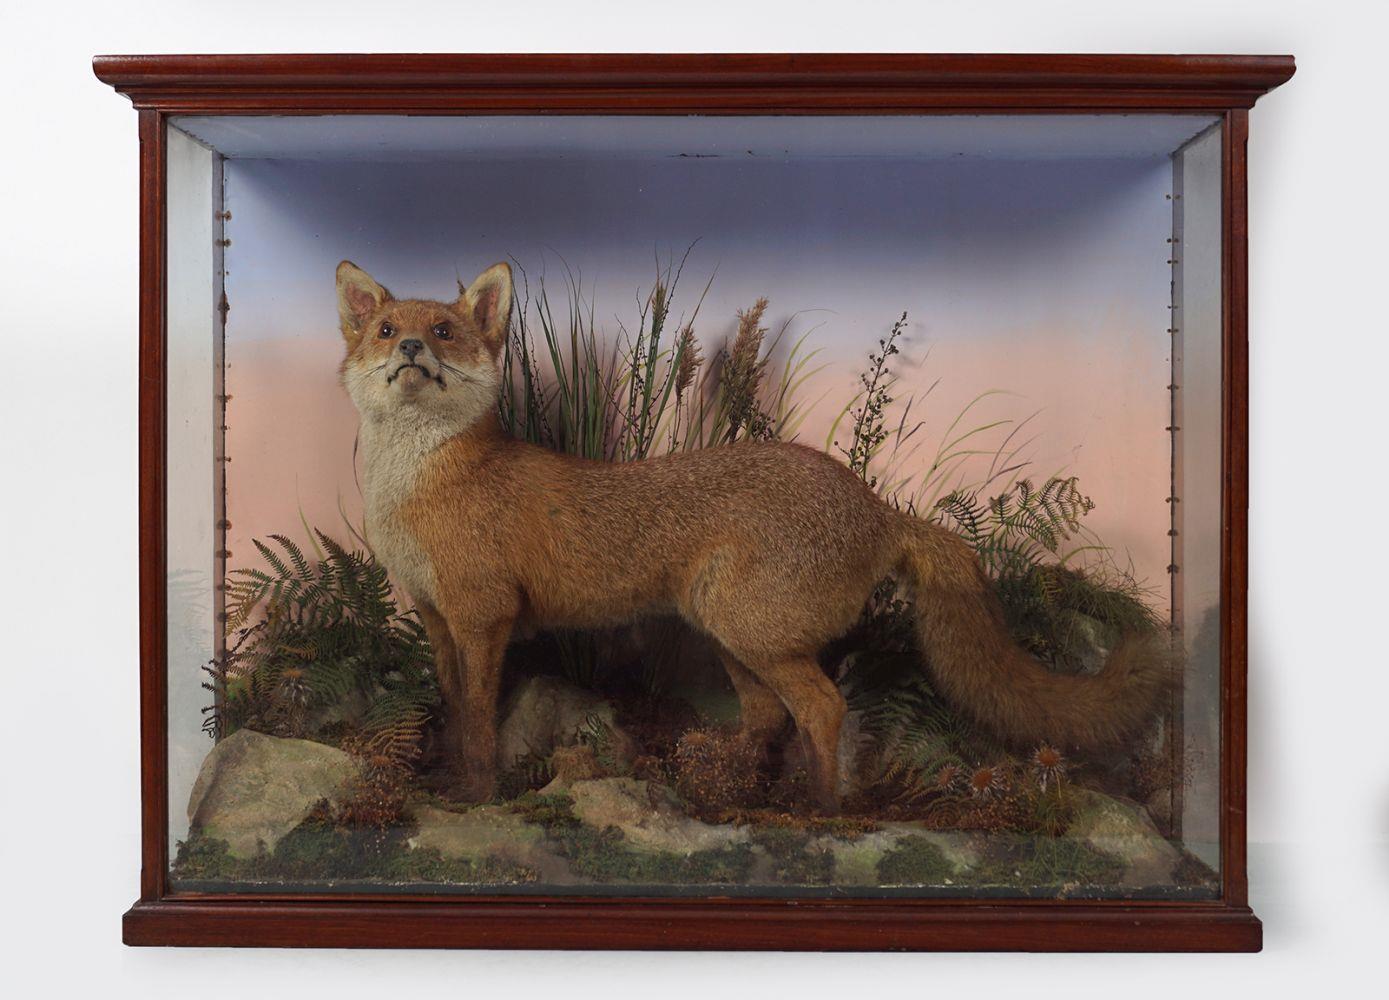 TAXIDERMY: FOX IN GLASS CASE